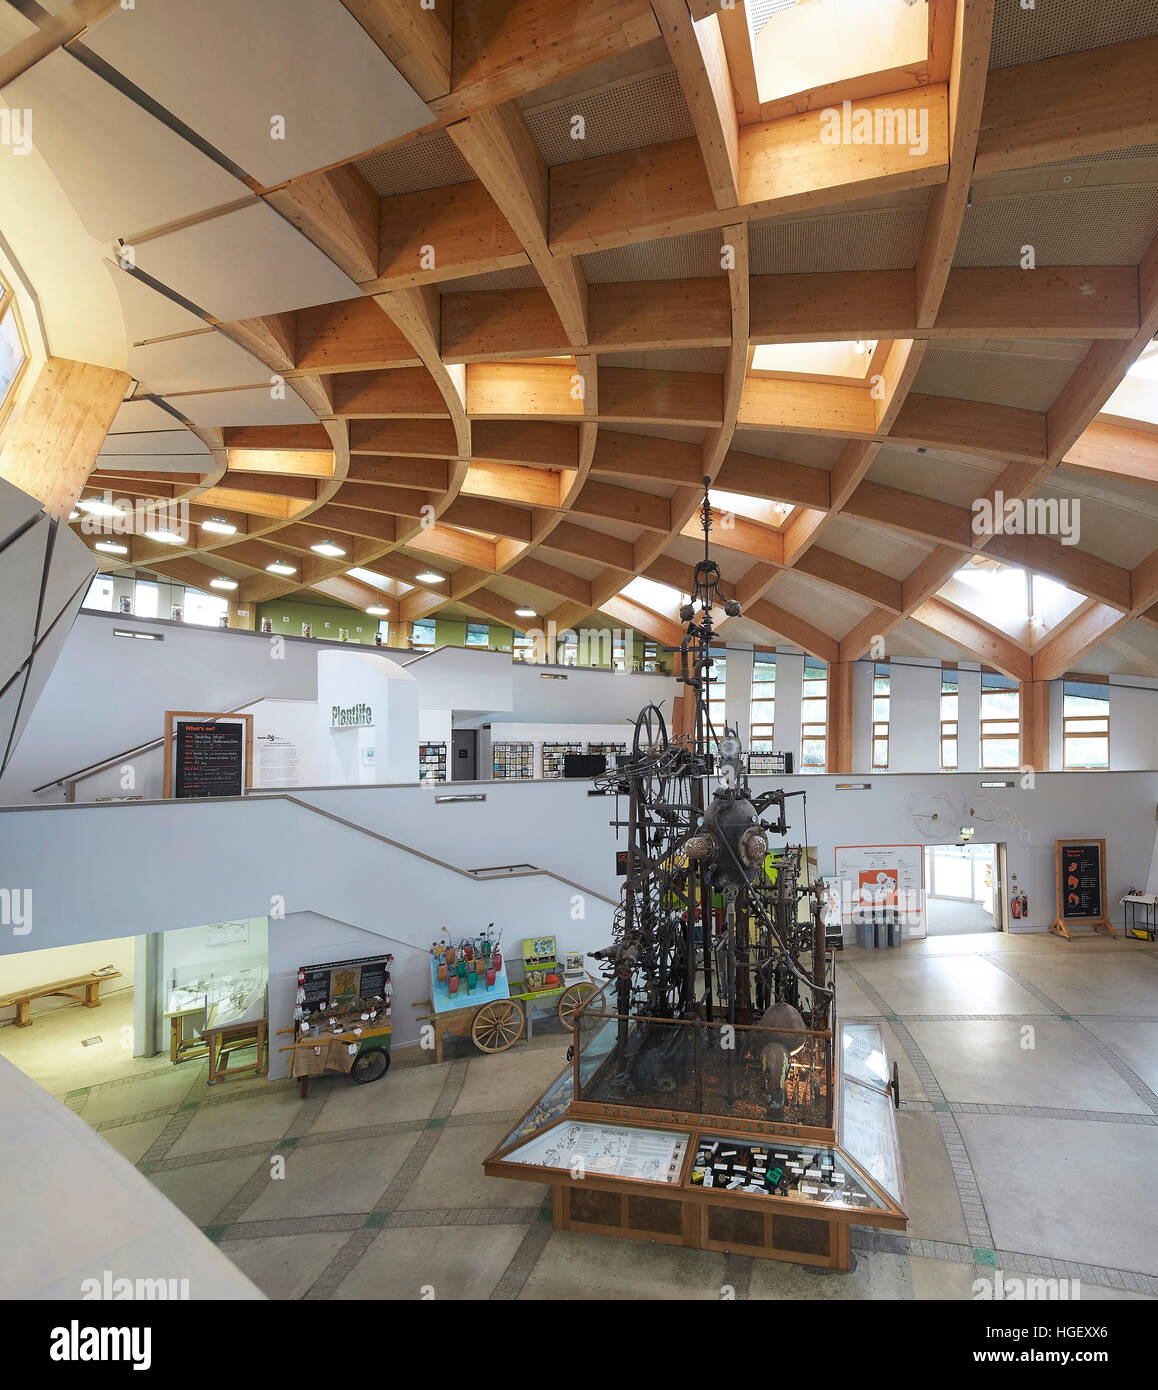 Glulam structure of exhibition space. Eden Project, Bodelva, United Kingdom. Architect: Grimshaw, 2016. Stock Photo